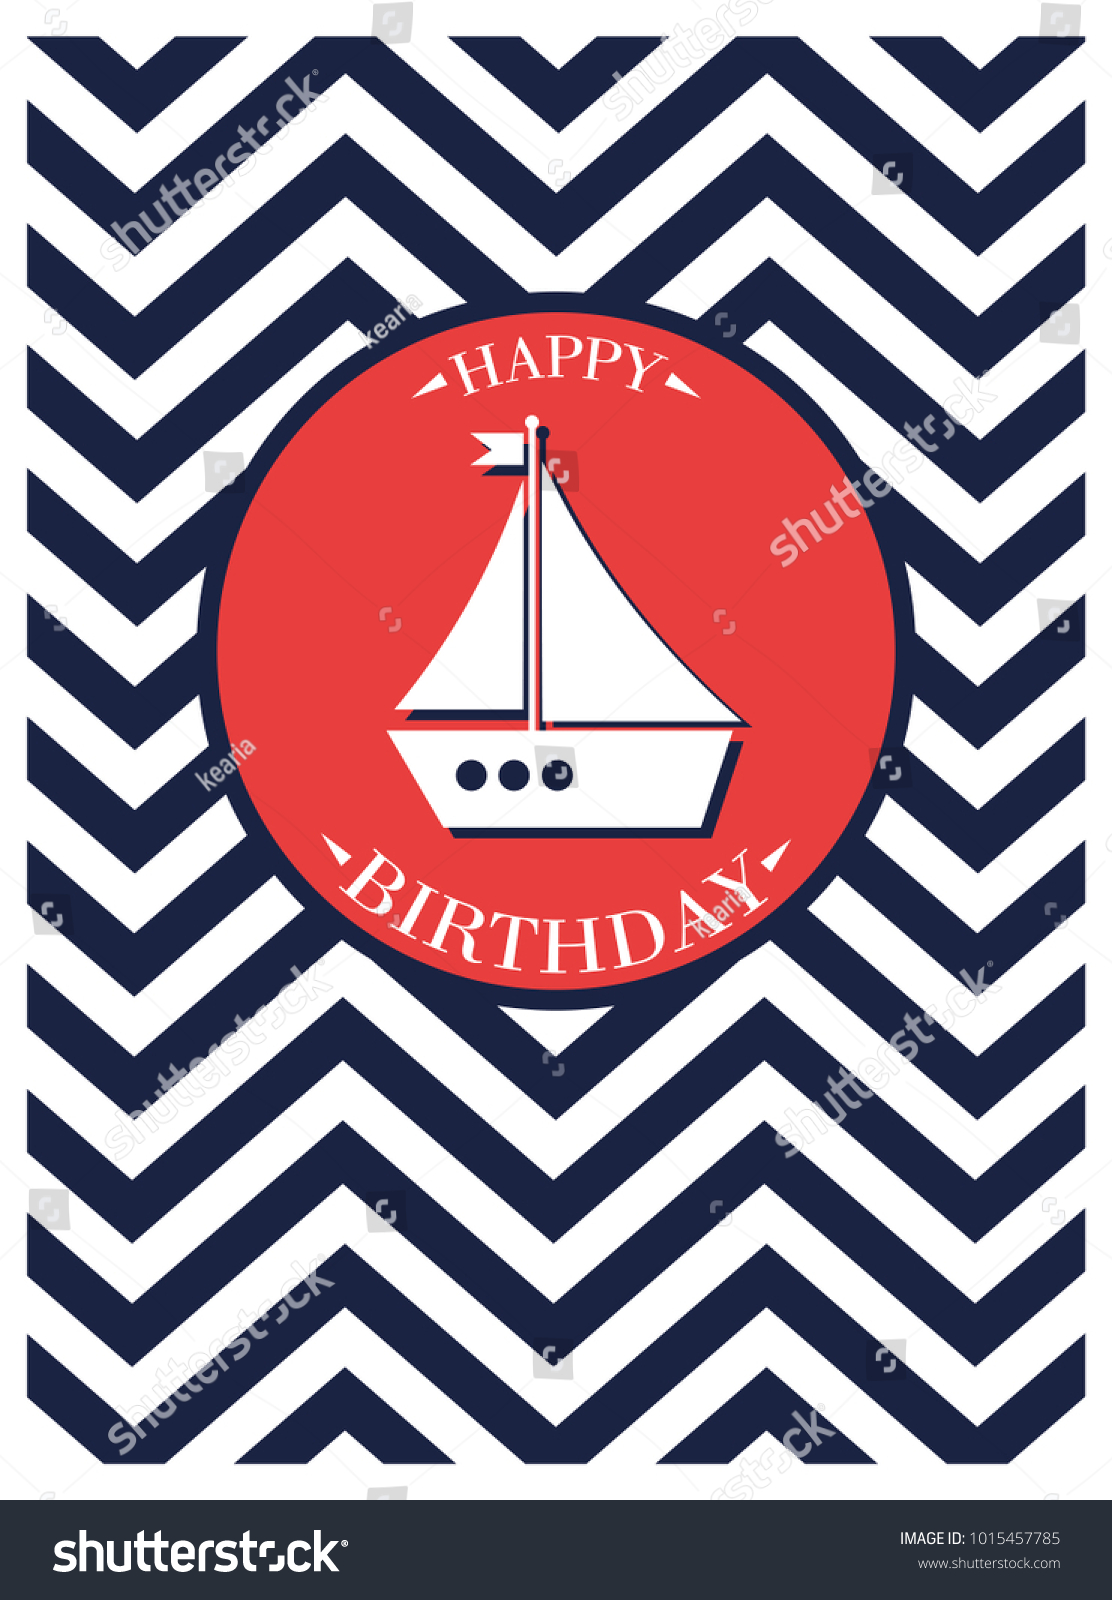 SVG of Happy Birthday greeting card . Vector illustration svg